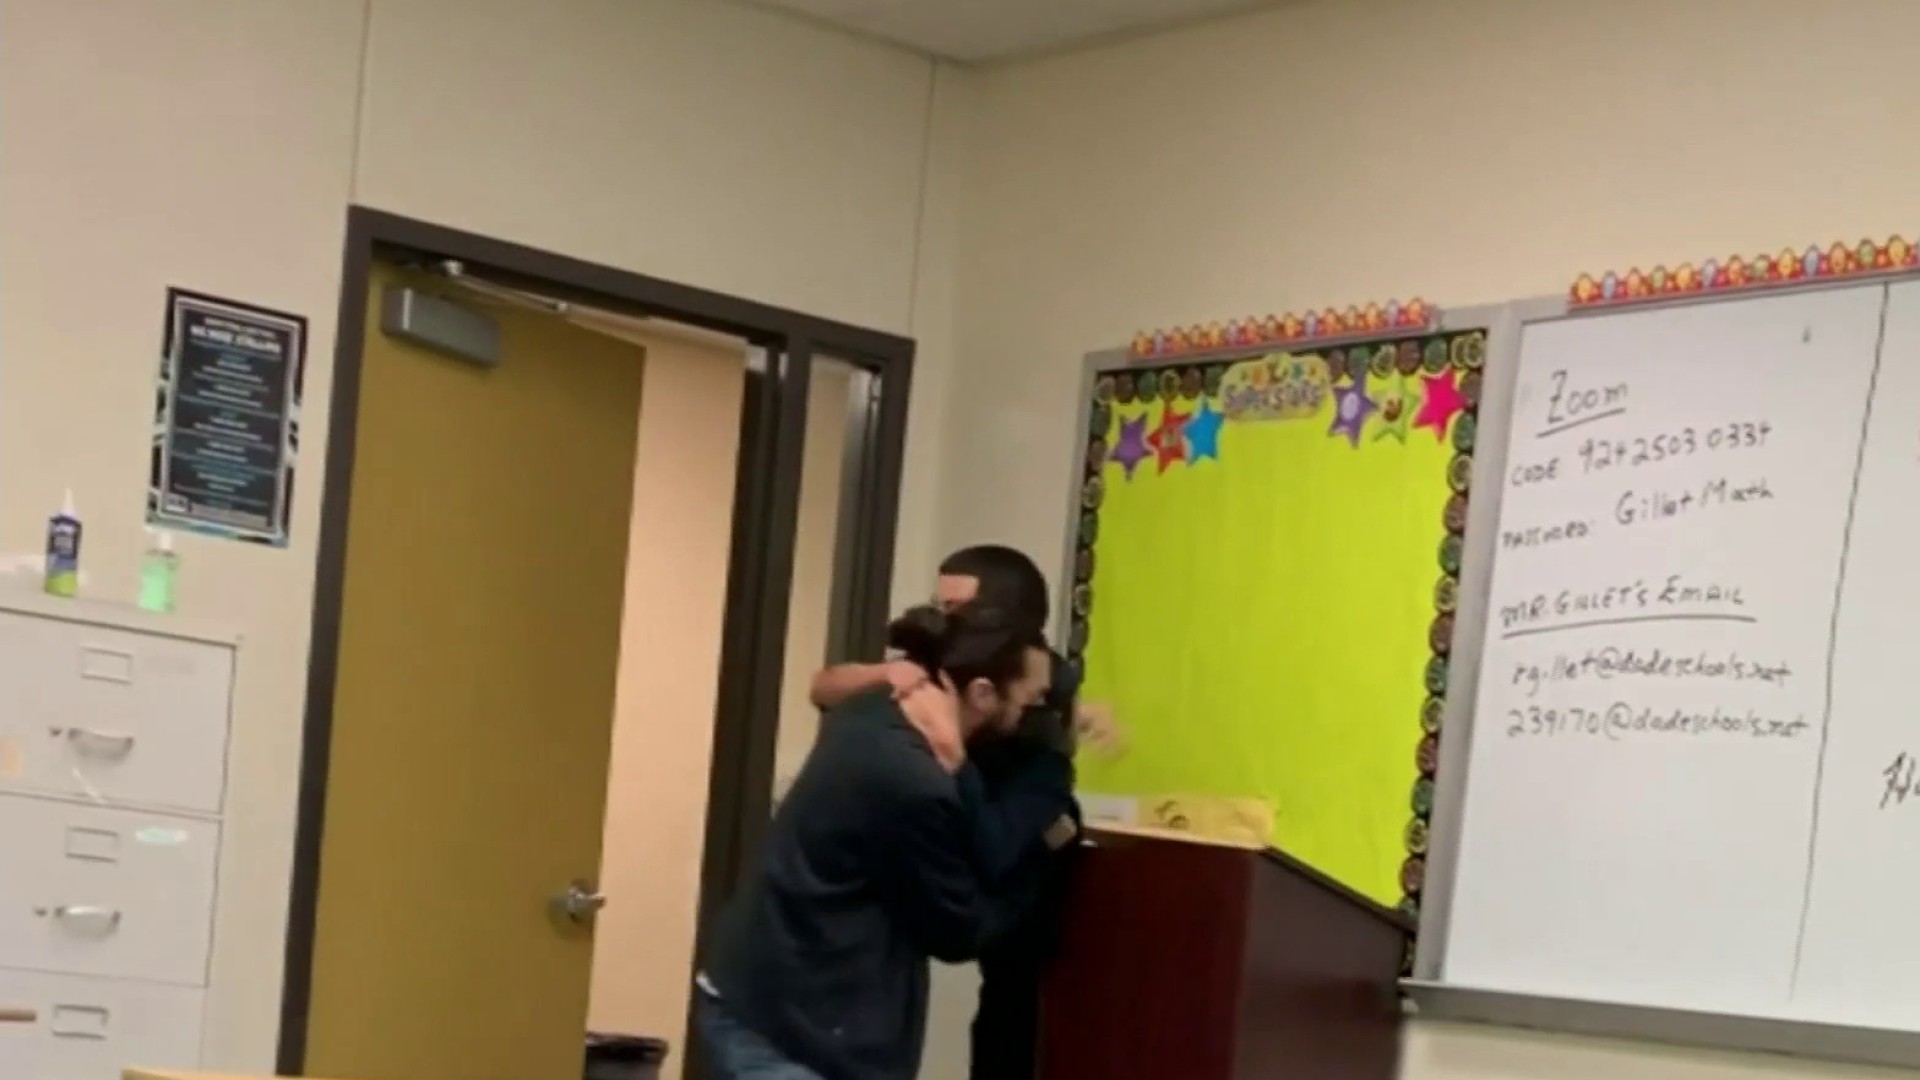 Teacher And Student - Video shows Florida teacher slamming student in dispute over bathroom break